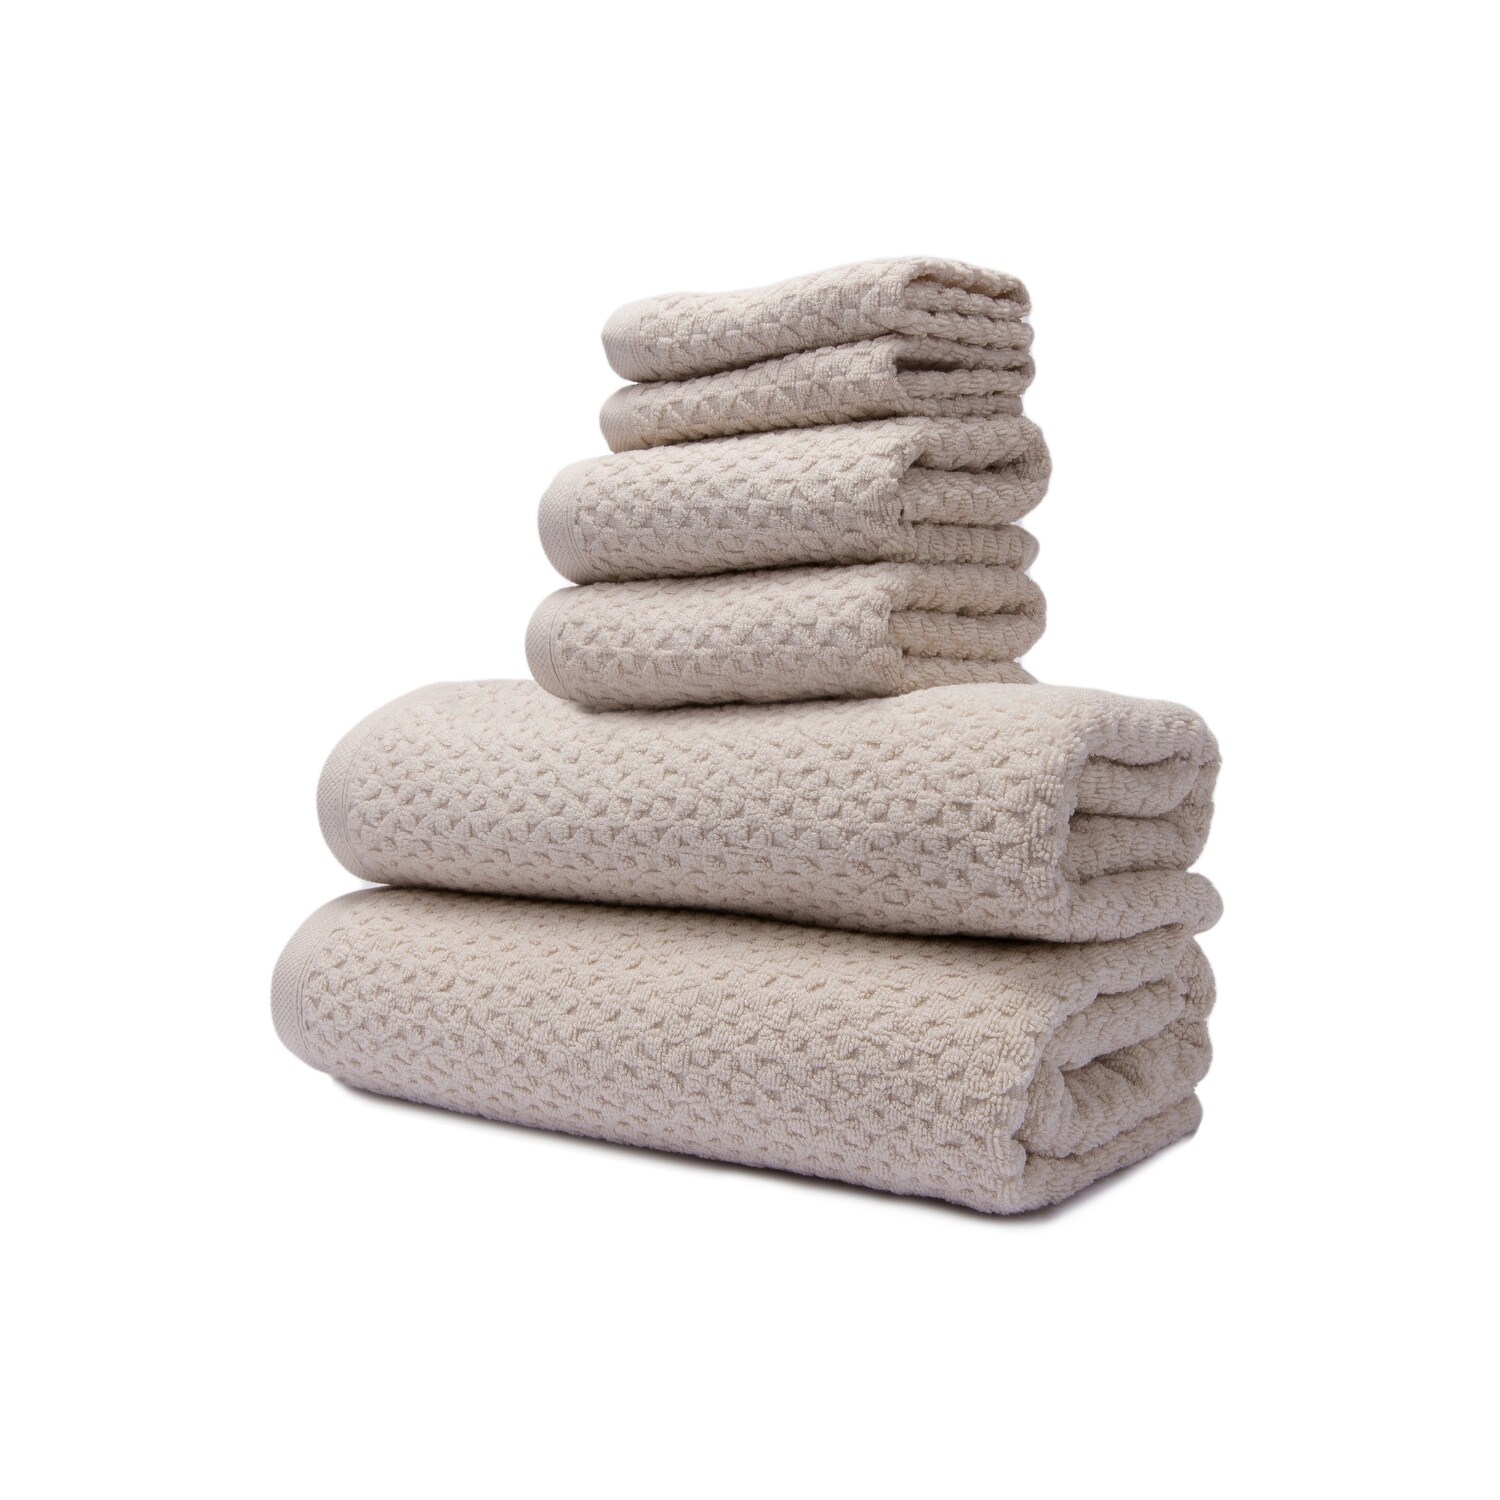 https://ak1.ostkcdn.com/images/products/is/images/direct/09d60e5e5aaf7108e93a7b4210a3395f08ca3ee4/Classic-Turkish-Towels-Hardwick-Jacquard-6-Pc-Towel-Set.jpg